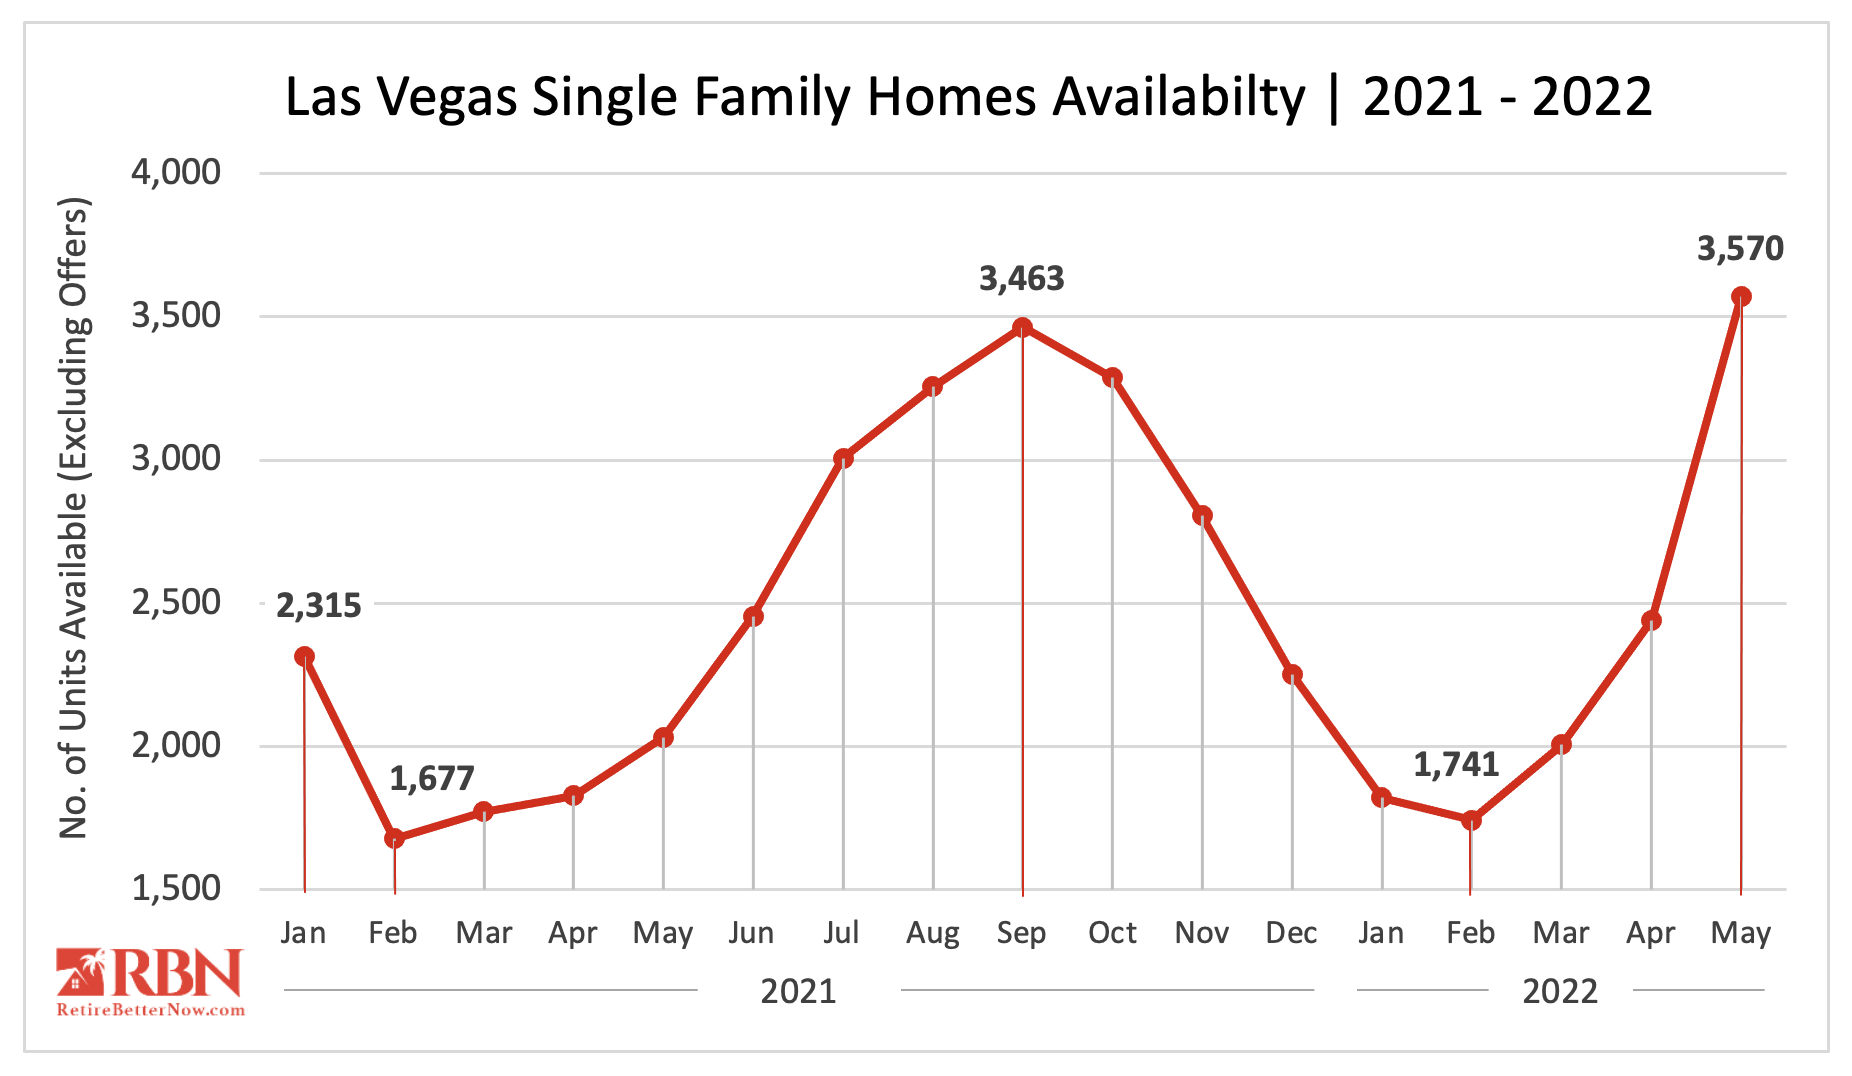 Las Vegas Single Family Home Availability 2021 - 2022